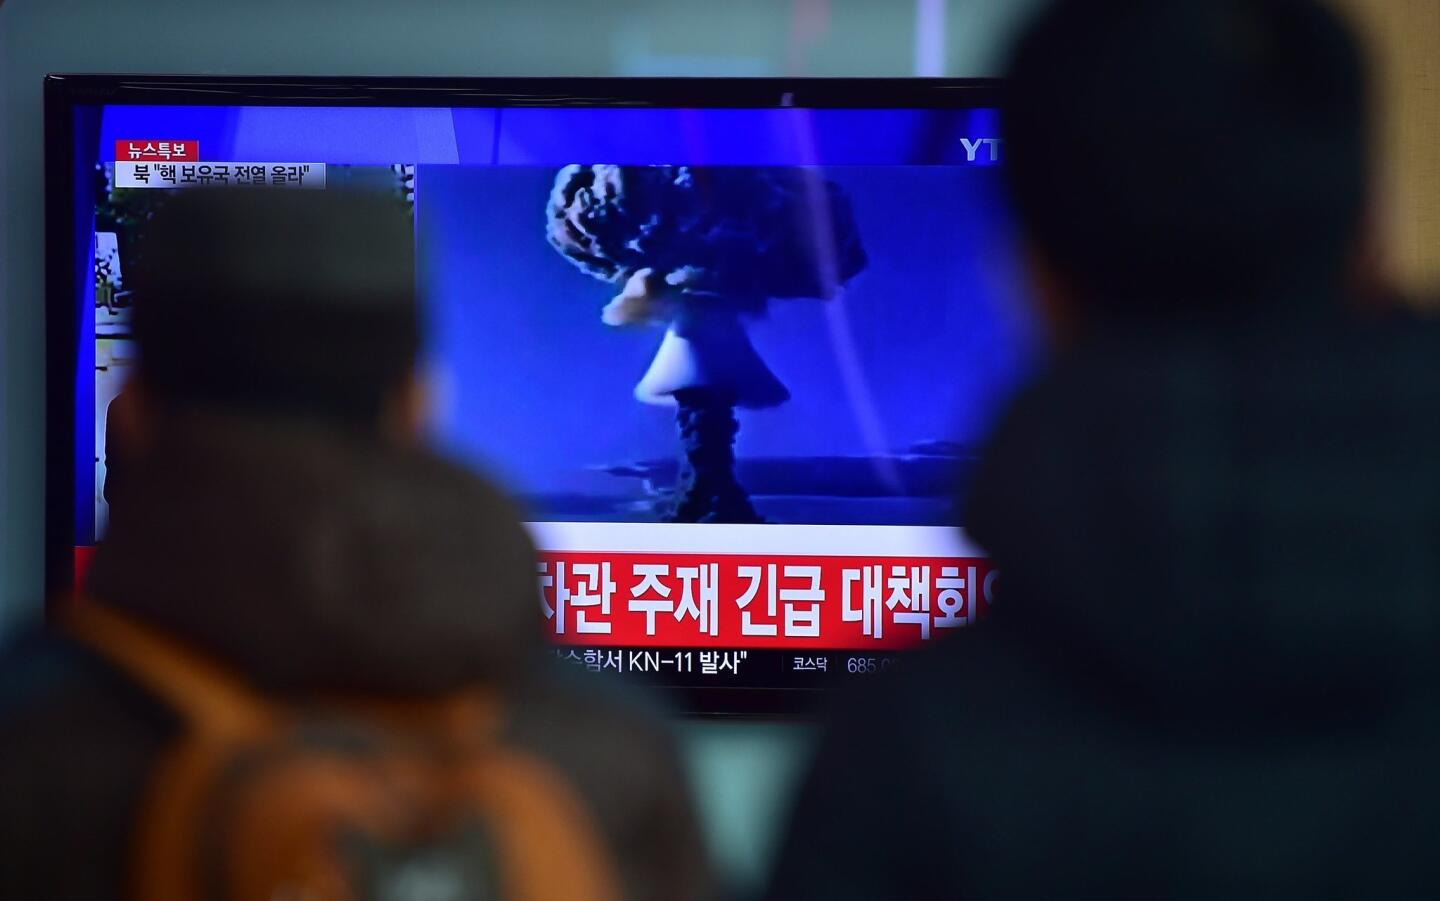 North Korea claims hydrogen bomb test